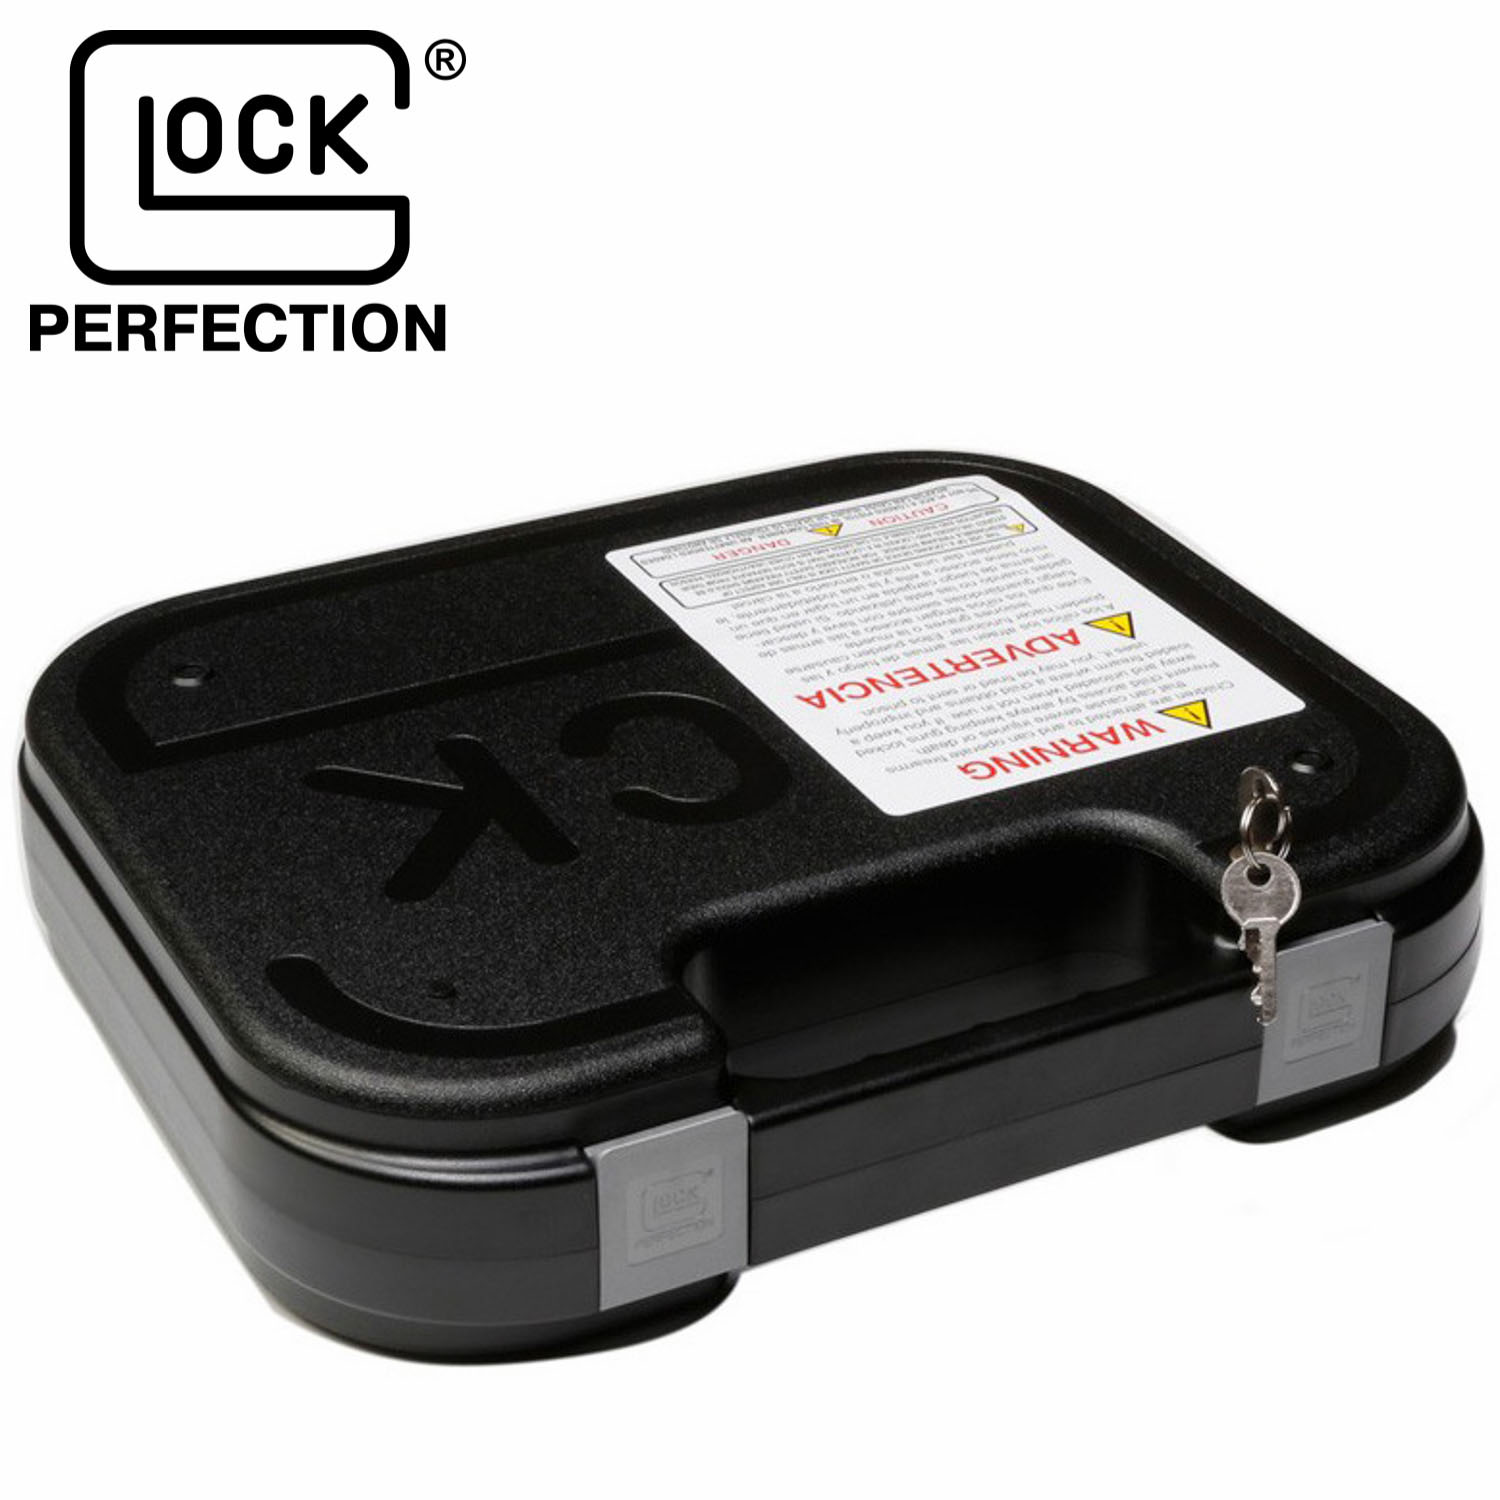 Glock Lock Case Complete Set NEW 